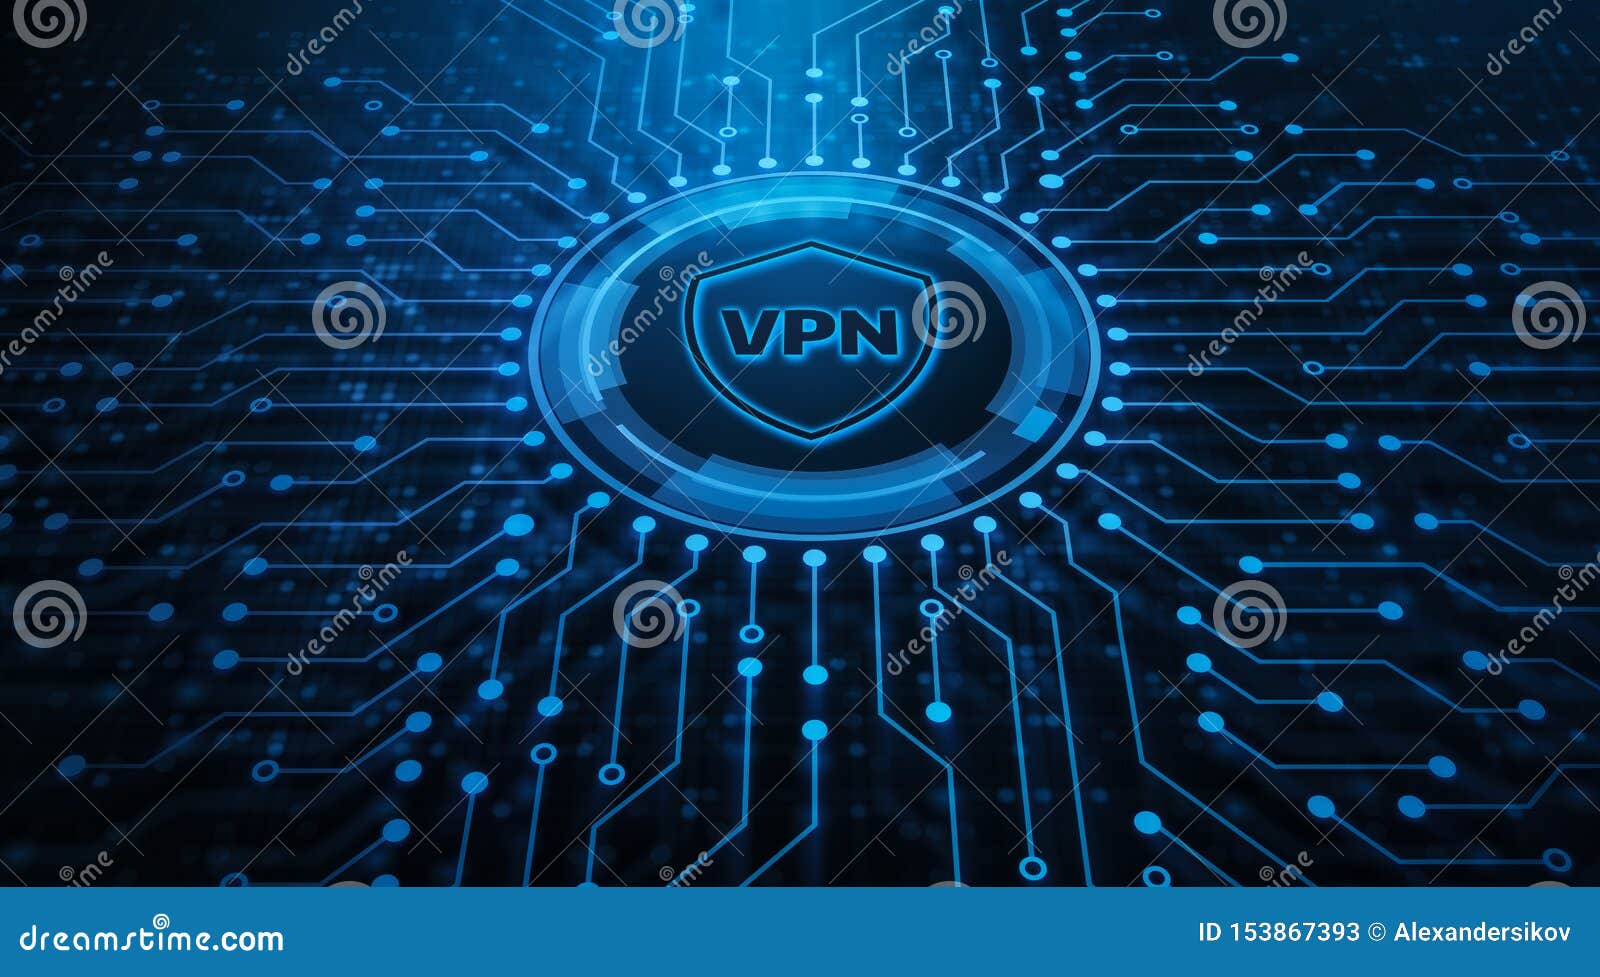 vpn network security internet privacy encryption concept